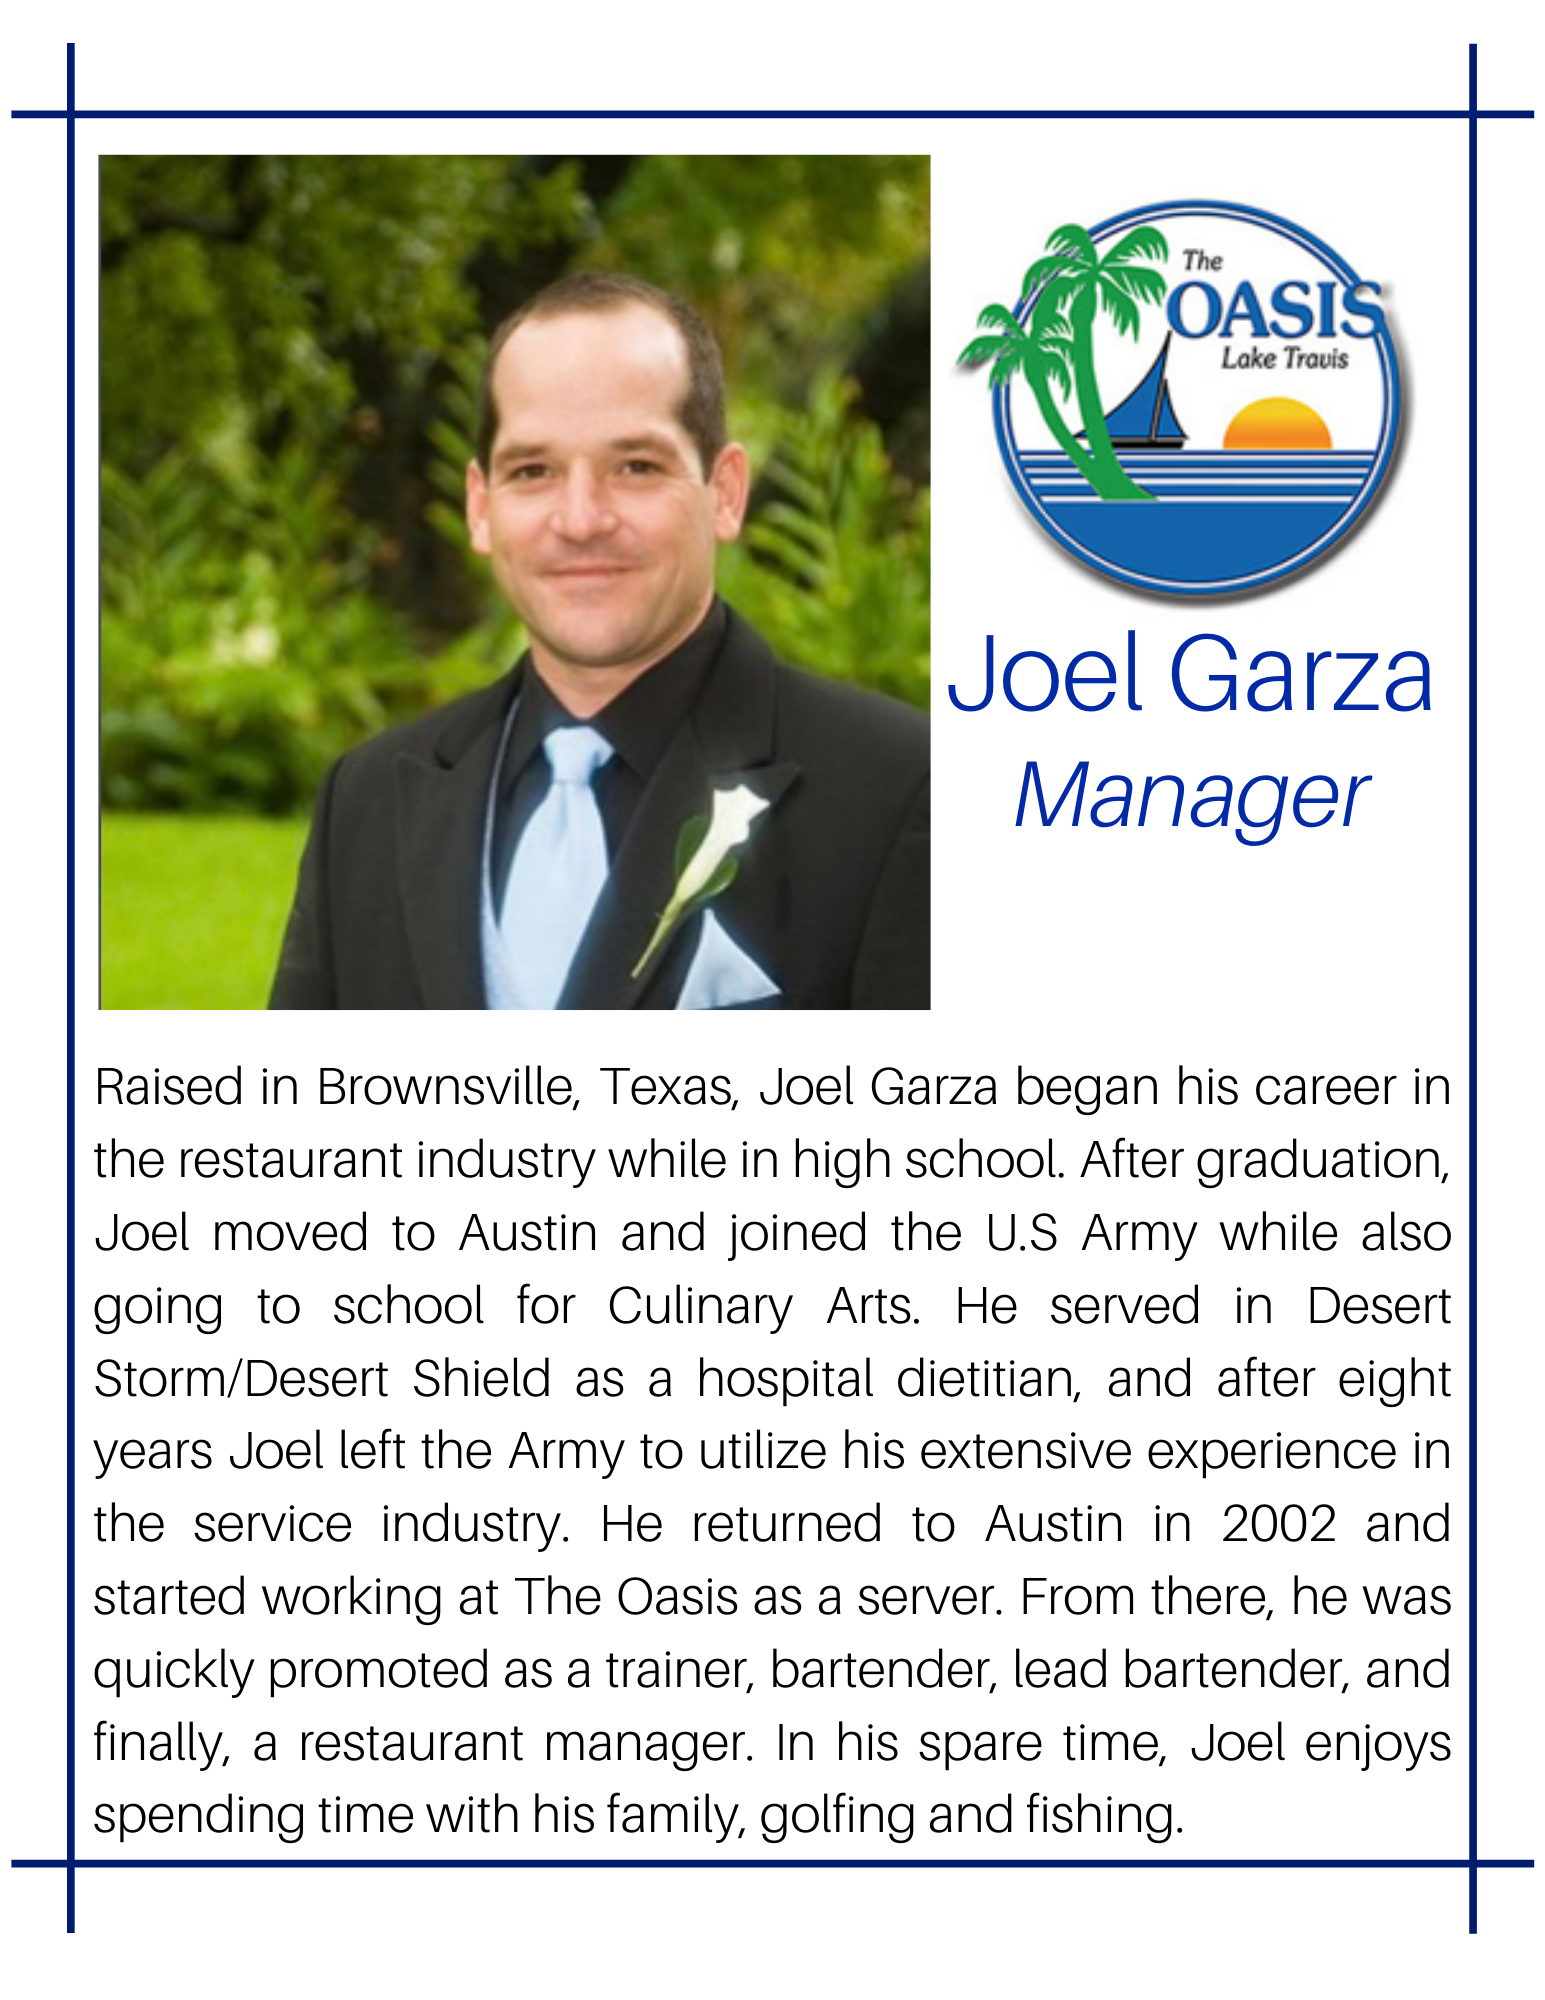 Manager Joel Garza